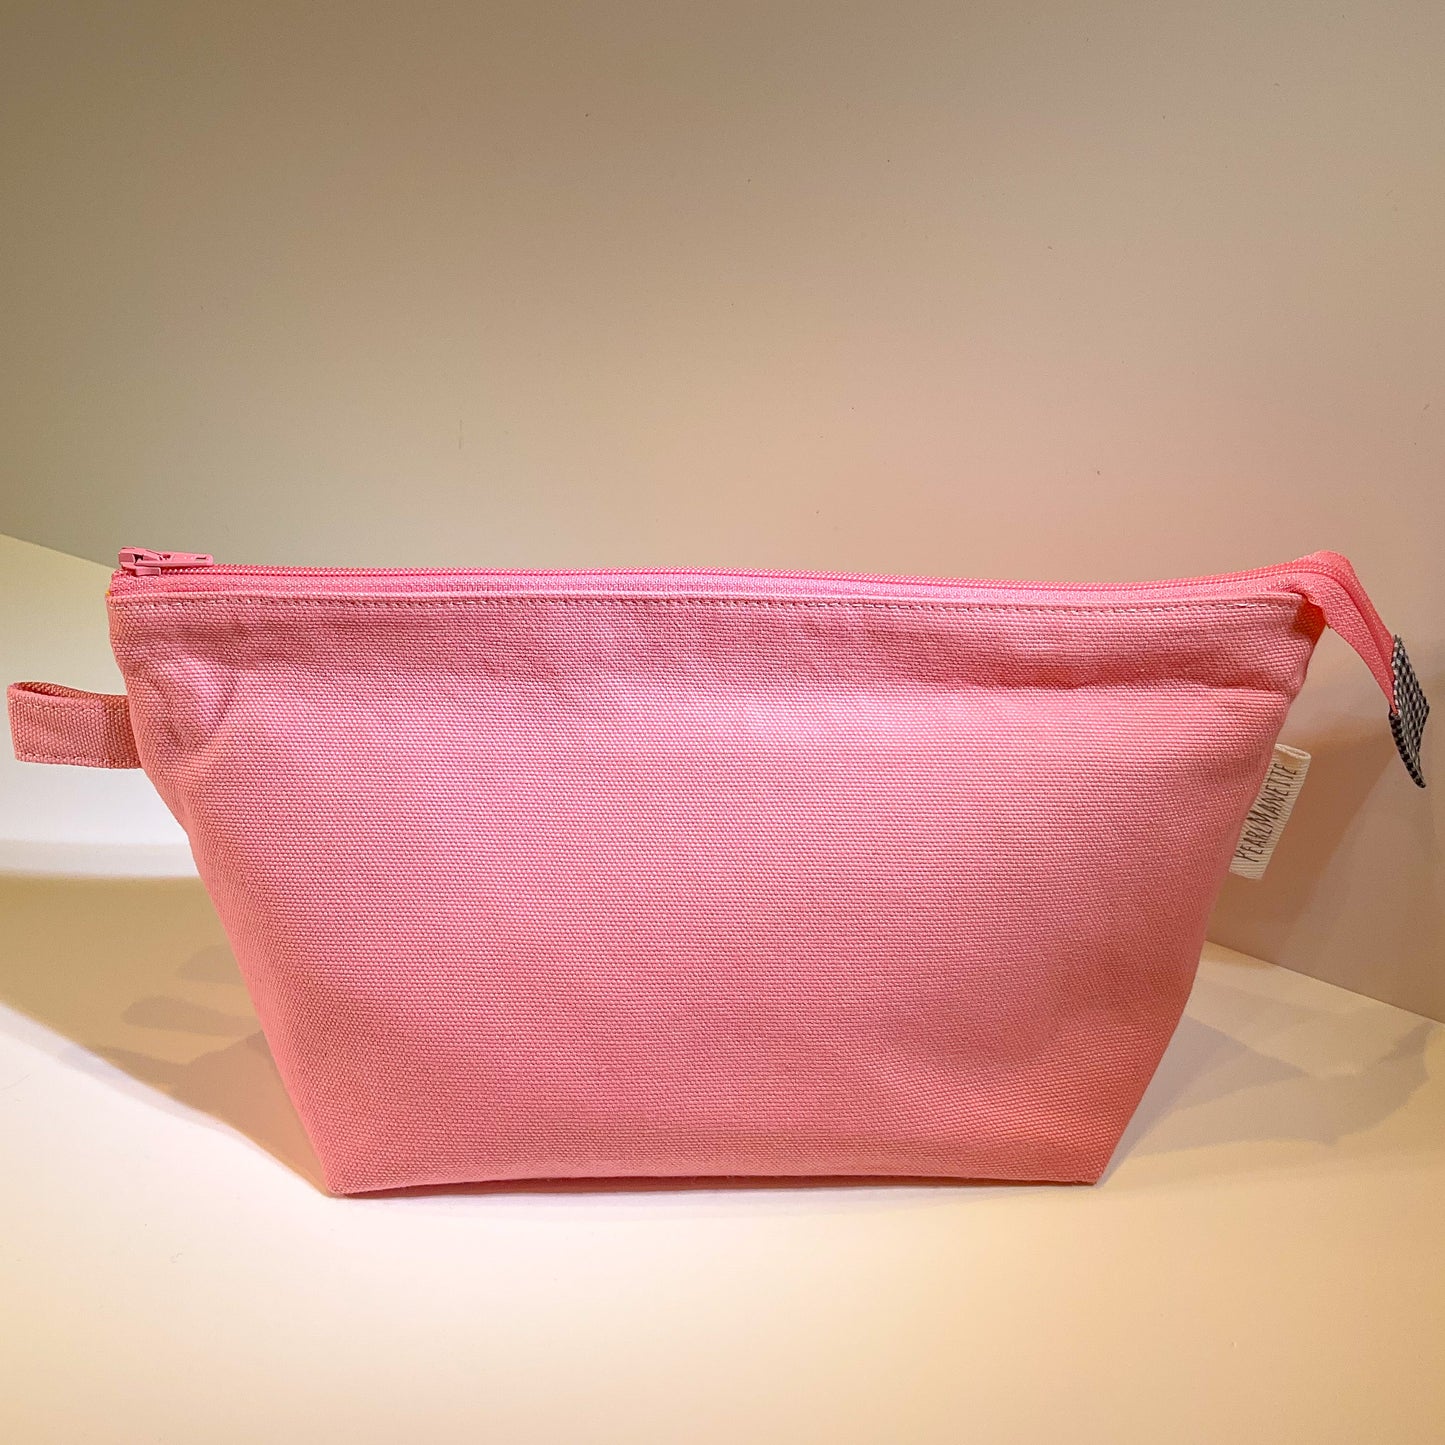 Esme Project Bag - Small - Big Sur Pink Canvas/Quilting Cotton